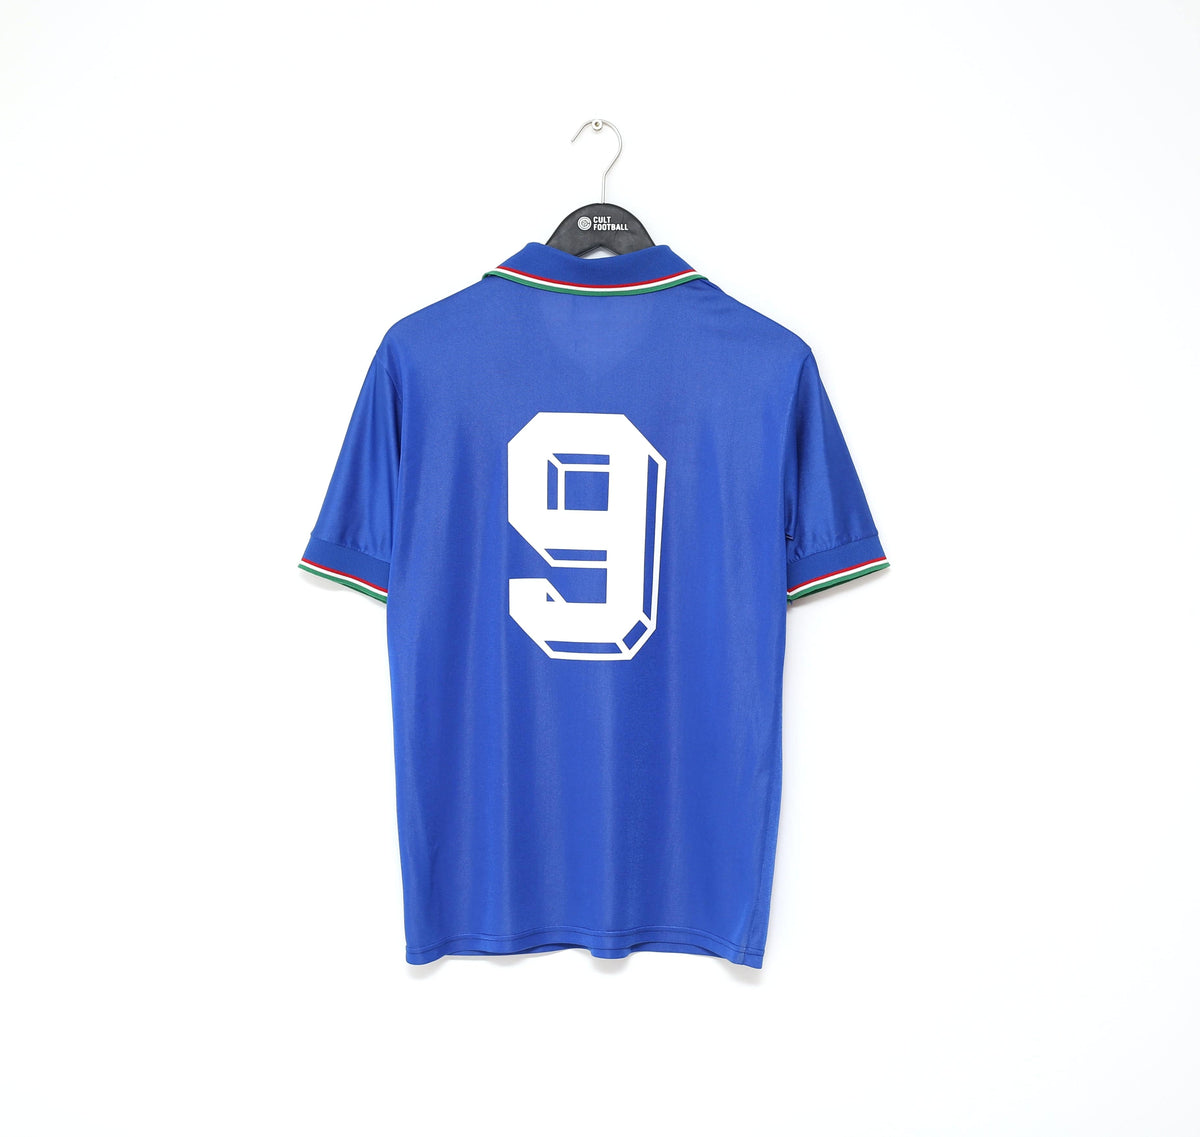 1990 ANCELOTTI #9 Italy Vintage Diadora Football Shirt (S) Real Madrid Italia 90